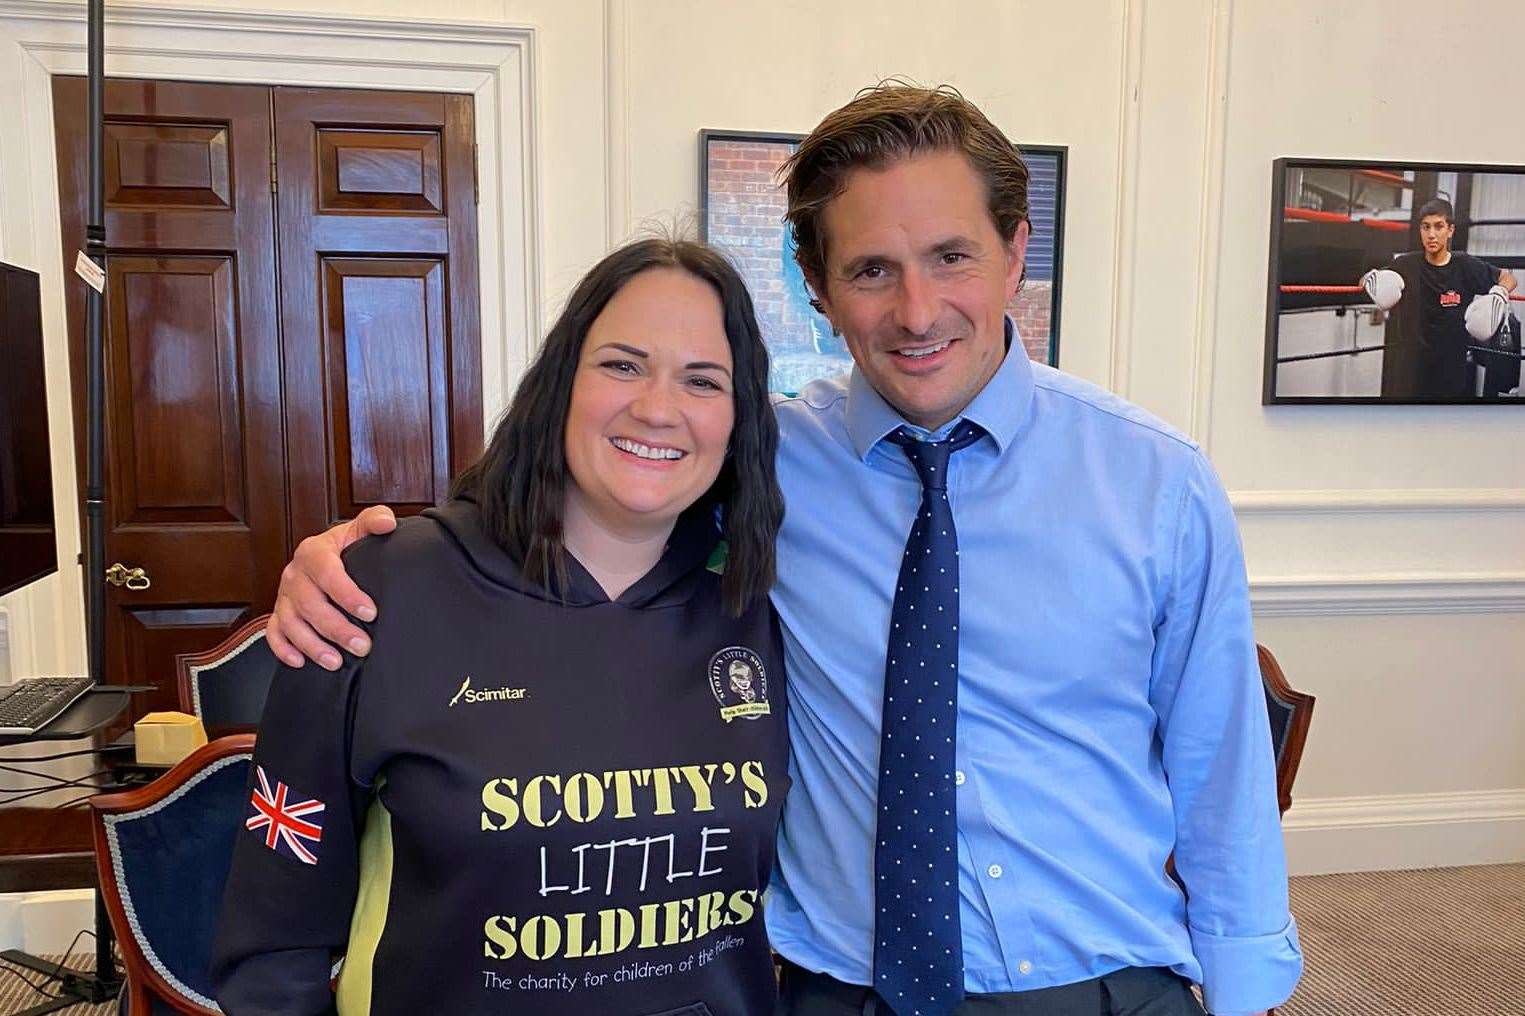 Scotty's Little Soldiers founder Nikki Scott and MP Johnny Mercer